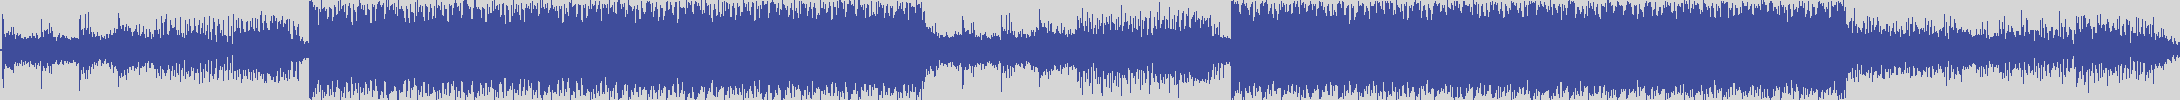 nf_boyz_records [NFY019] 2nd Set - All Around Me [Hypnotic Mix] audio wave form